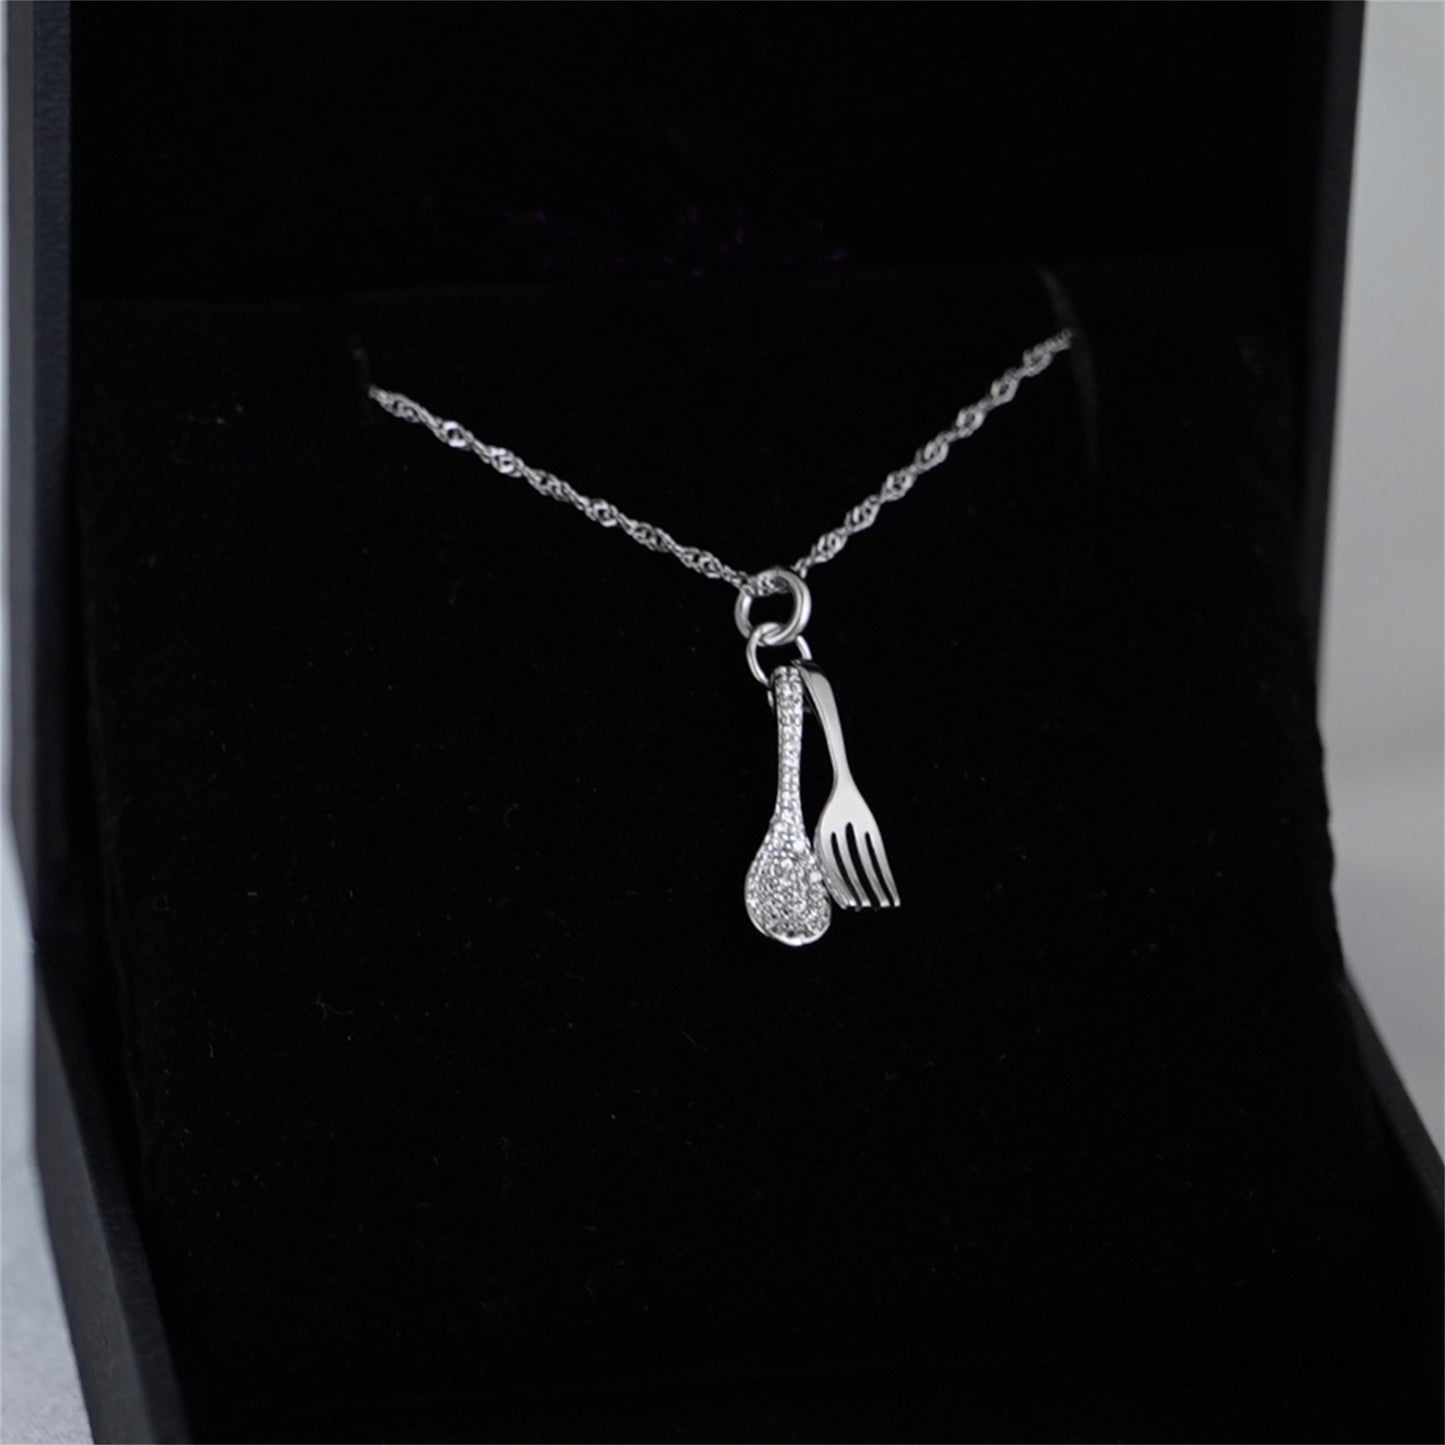 Rhodium on Sterling Silver Miniature Spoon Fork Paved CZ Charm Pendant Necklace - sugarkittenlondon